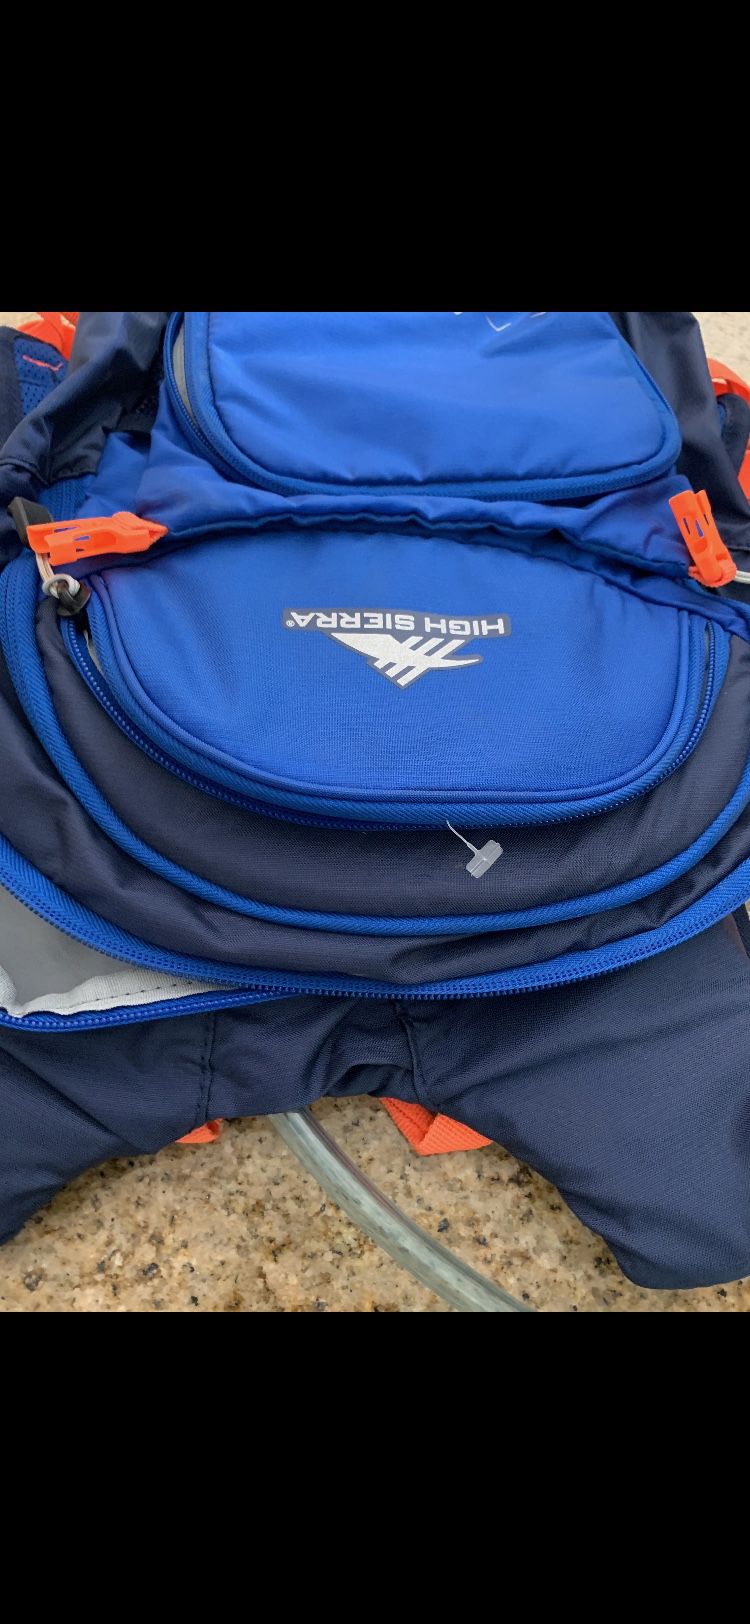 New high Sierra hydration backpack